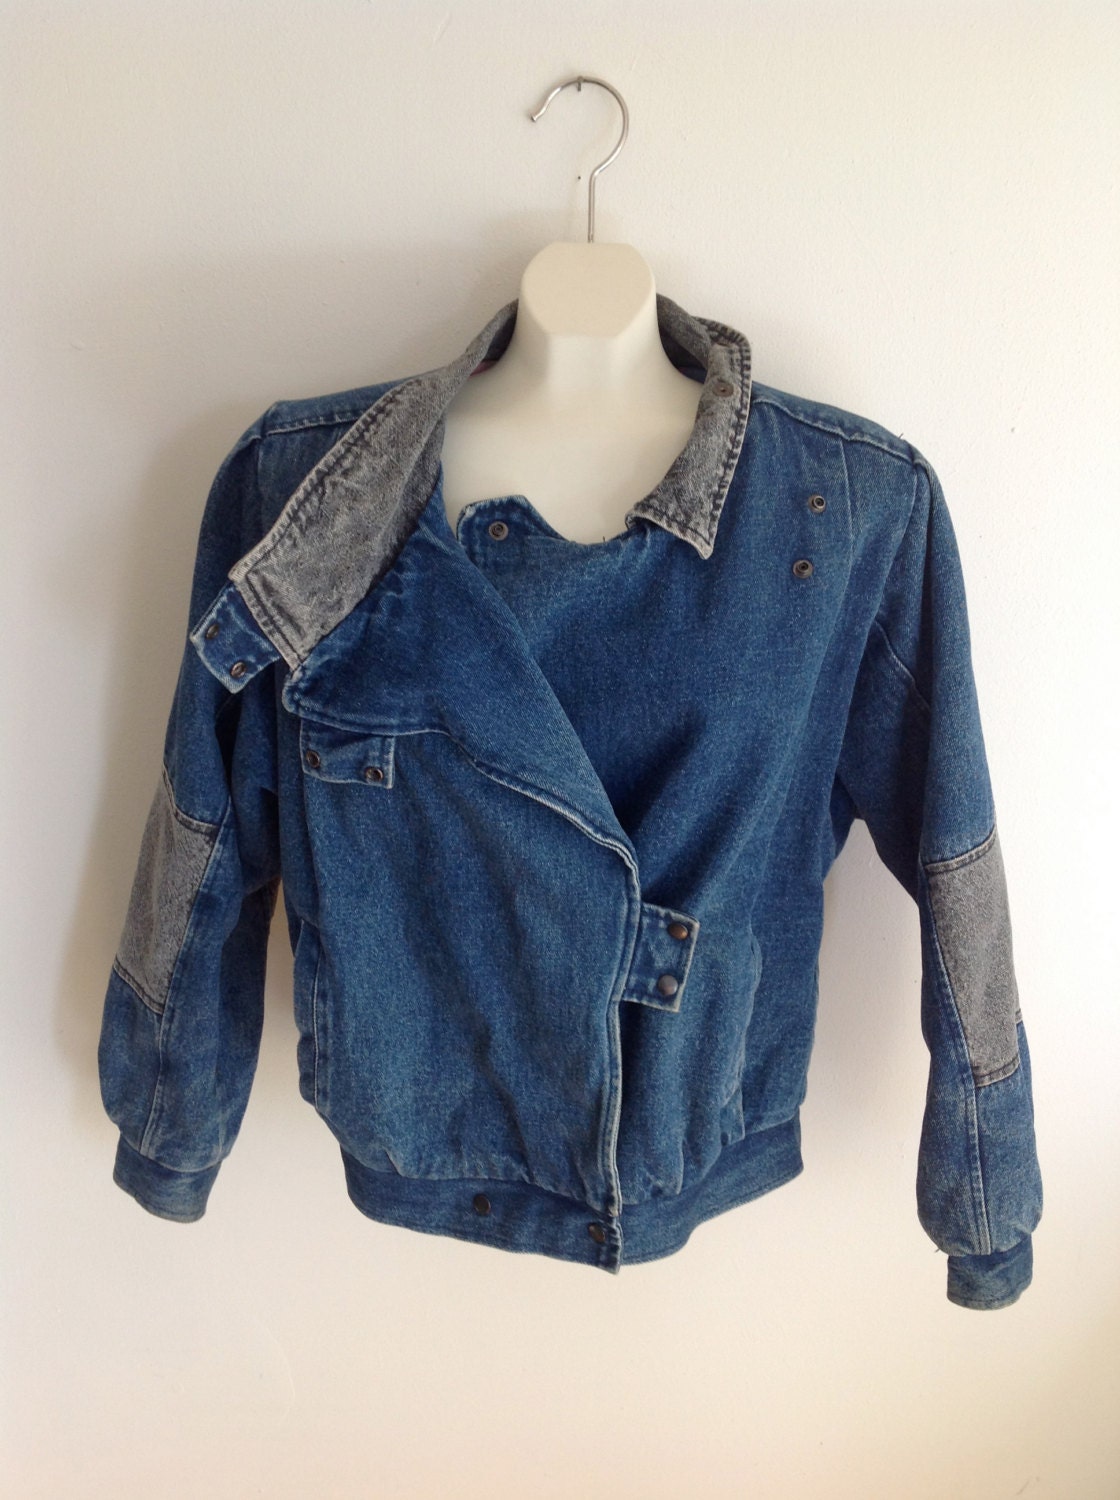 SALE Vintage 80s Uzzi Jean Jacket Size Medium